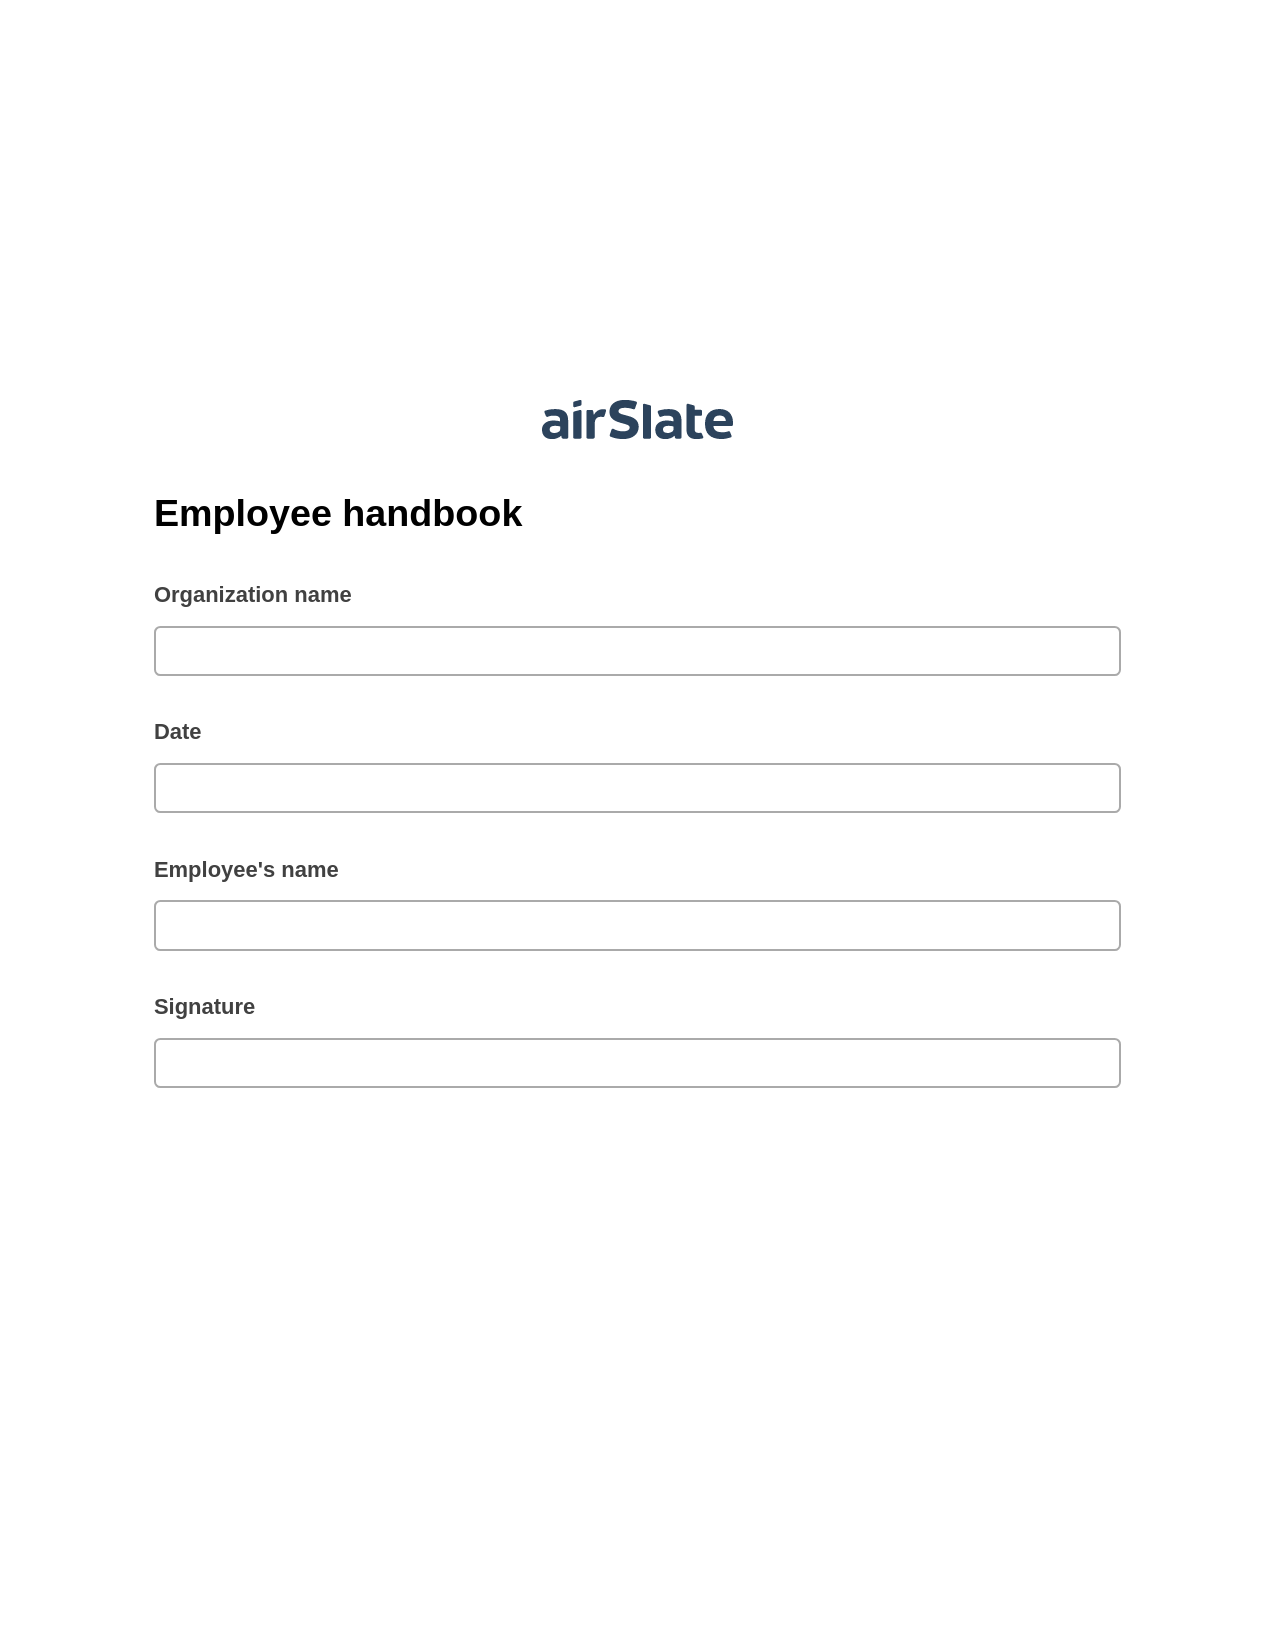 Employee handbook Pre-fill Slate from MS Dynamics 365 Records Bot, Hide Signatures Bot, Webhook Postfinish Bot